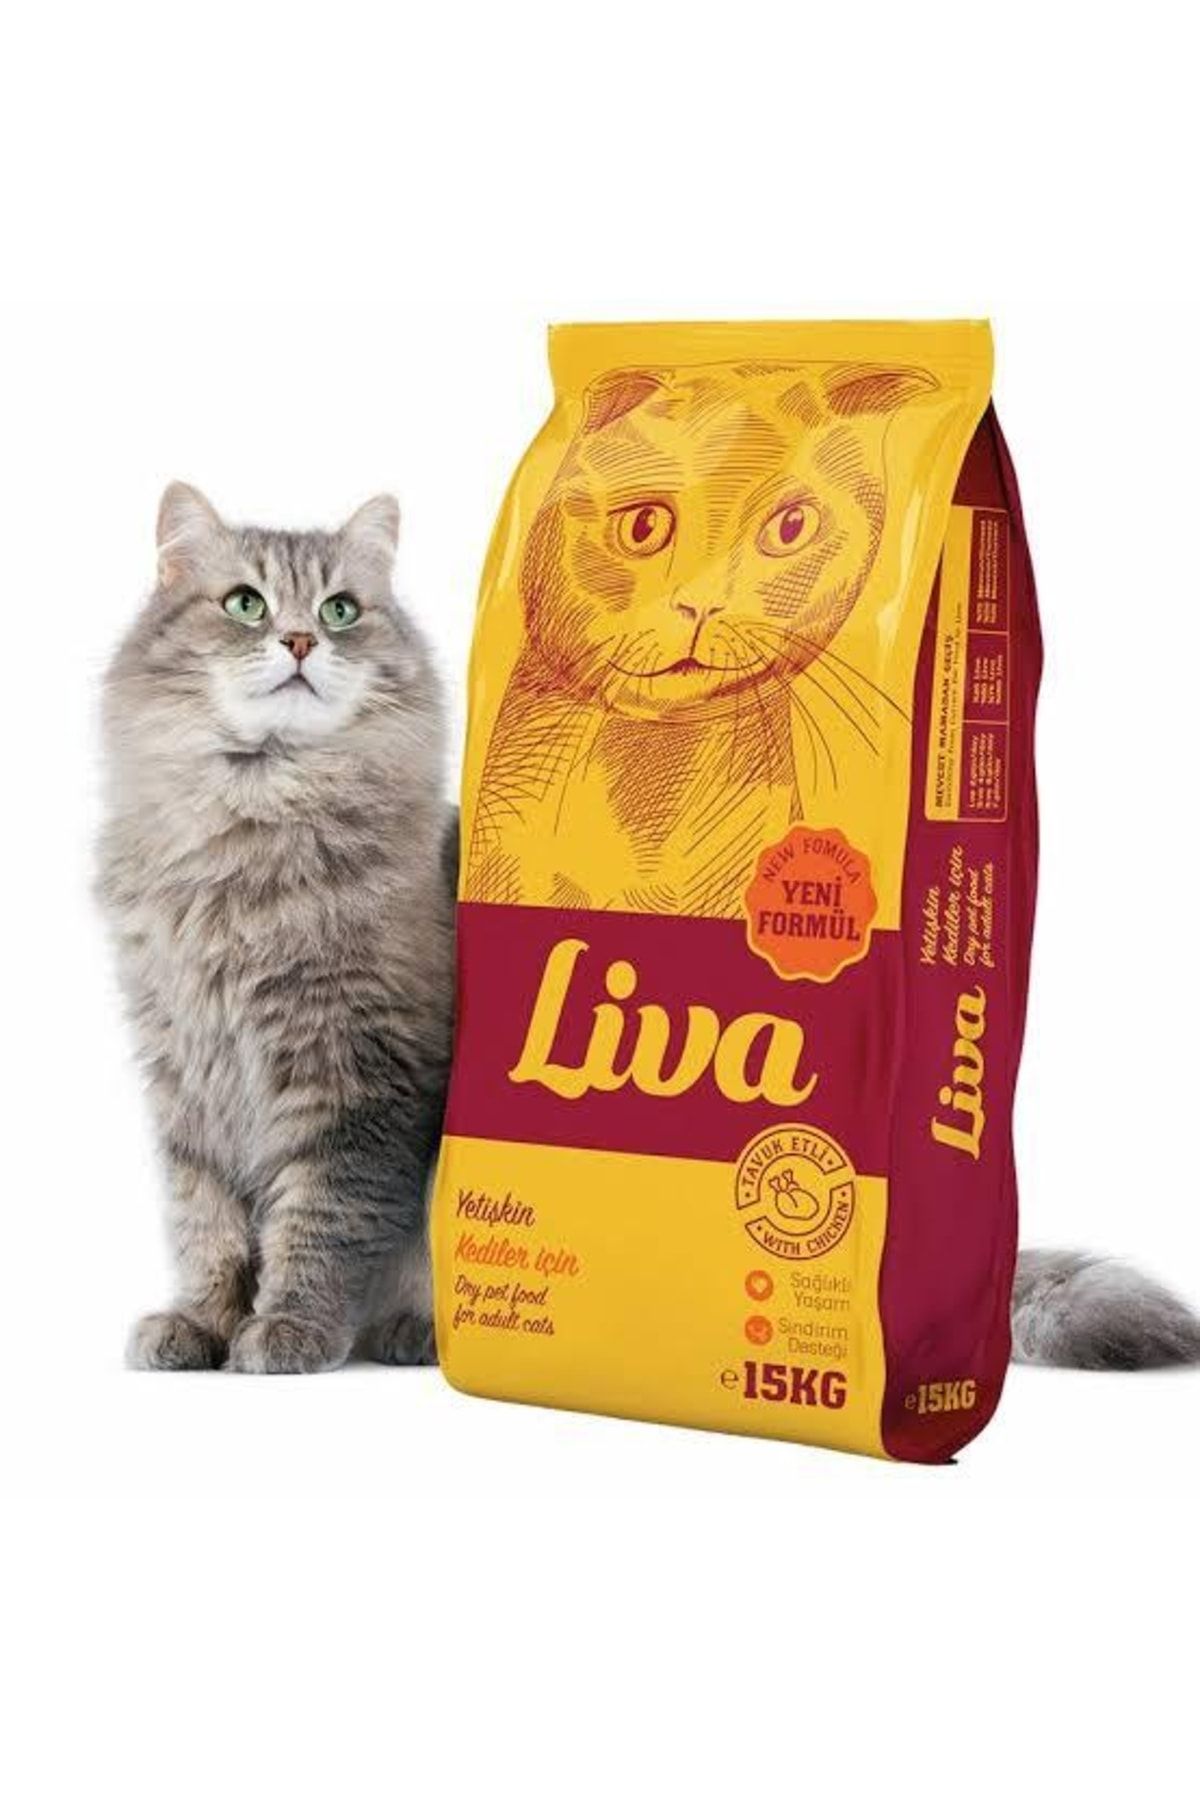 Liva Kedi Maması 15kg Fiyatı, Yorumları TRENDYOL